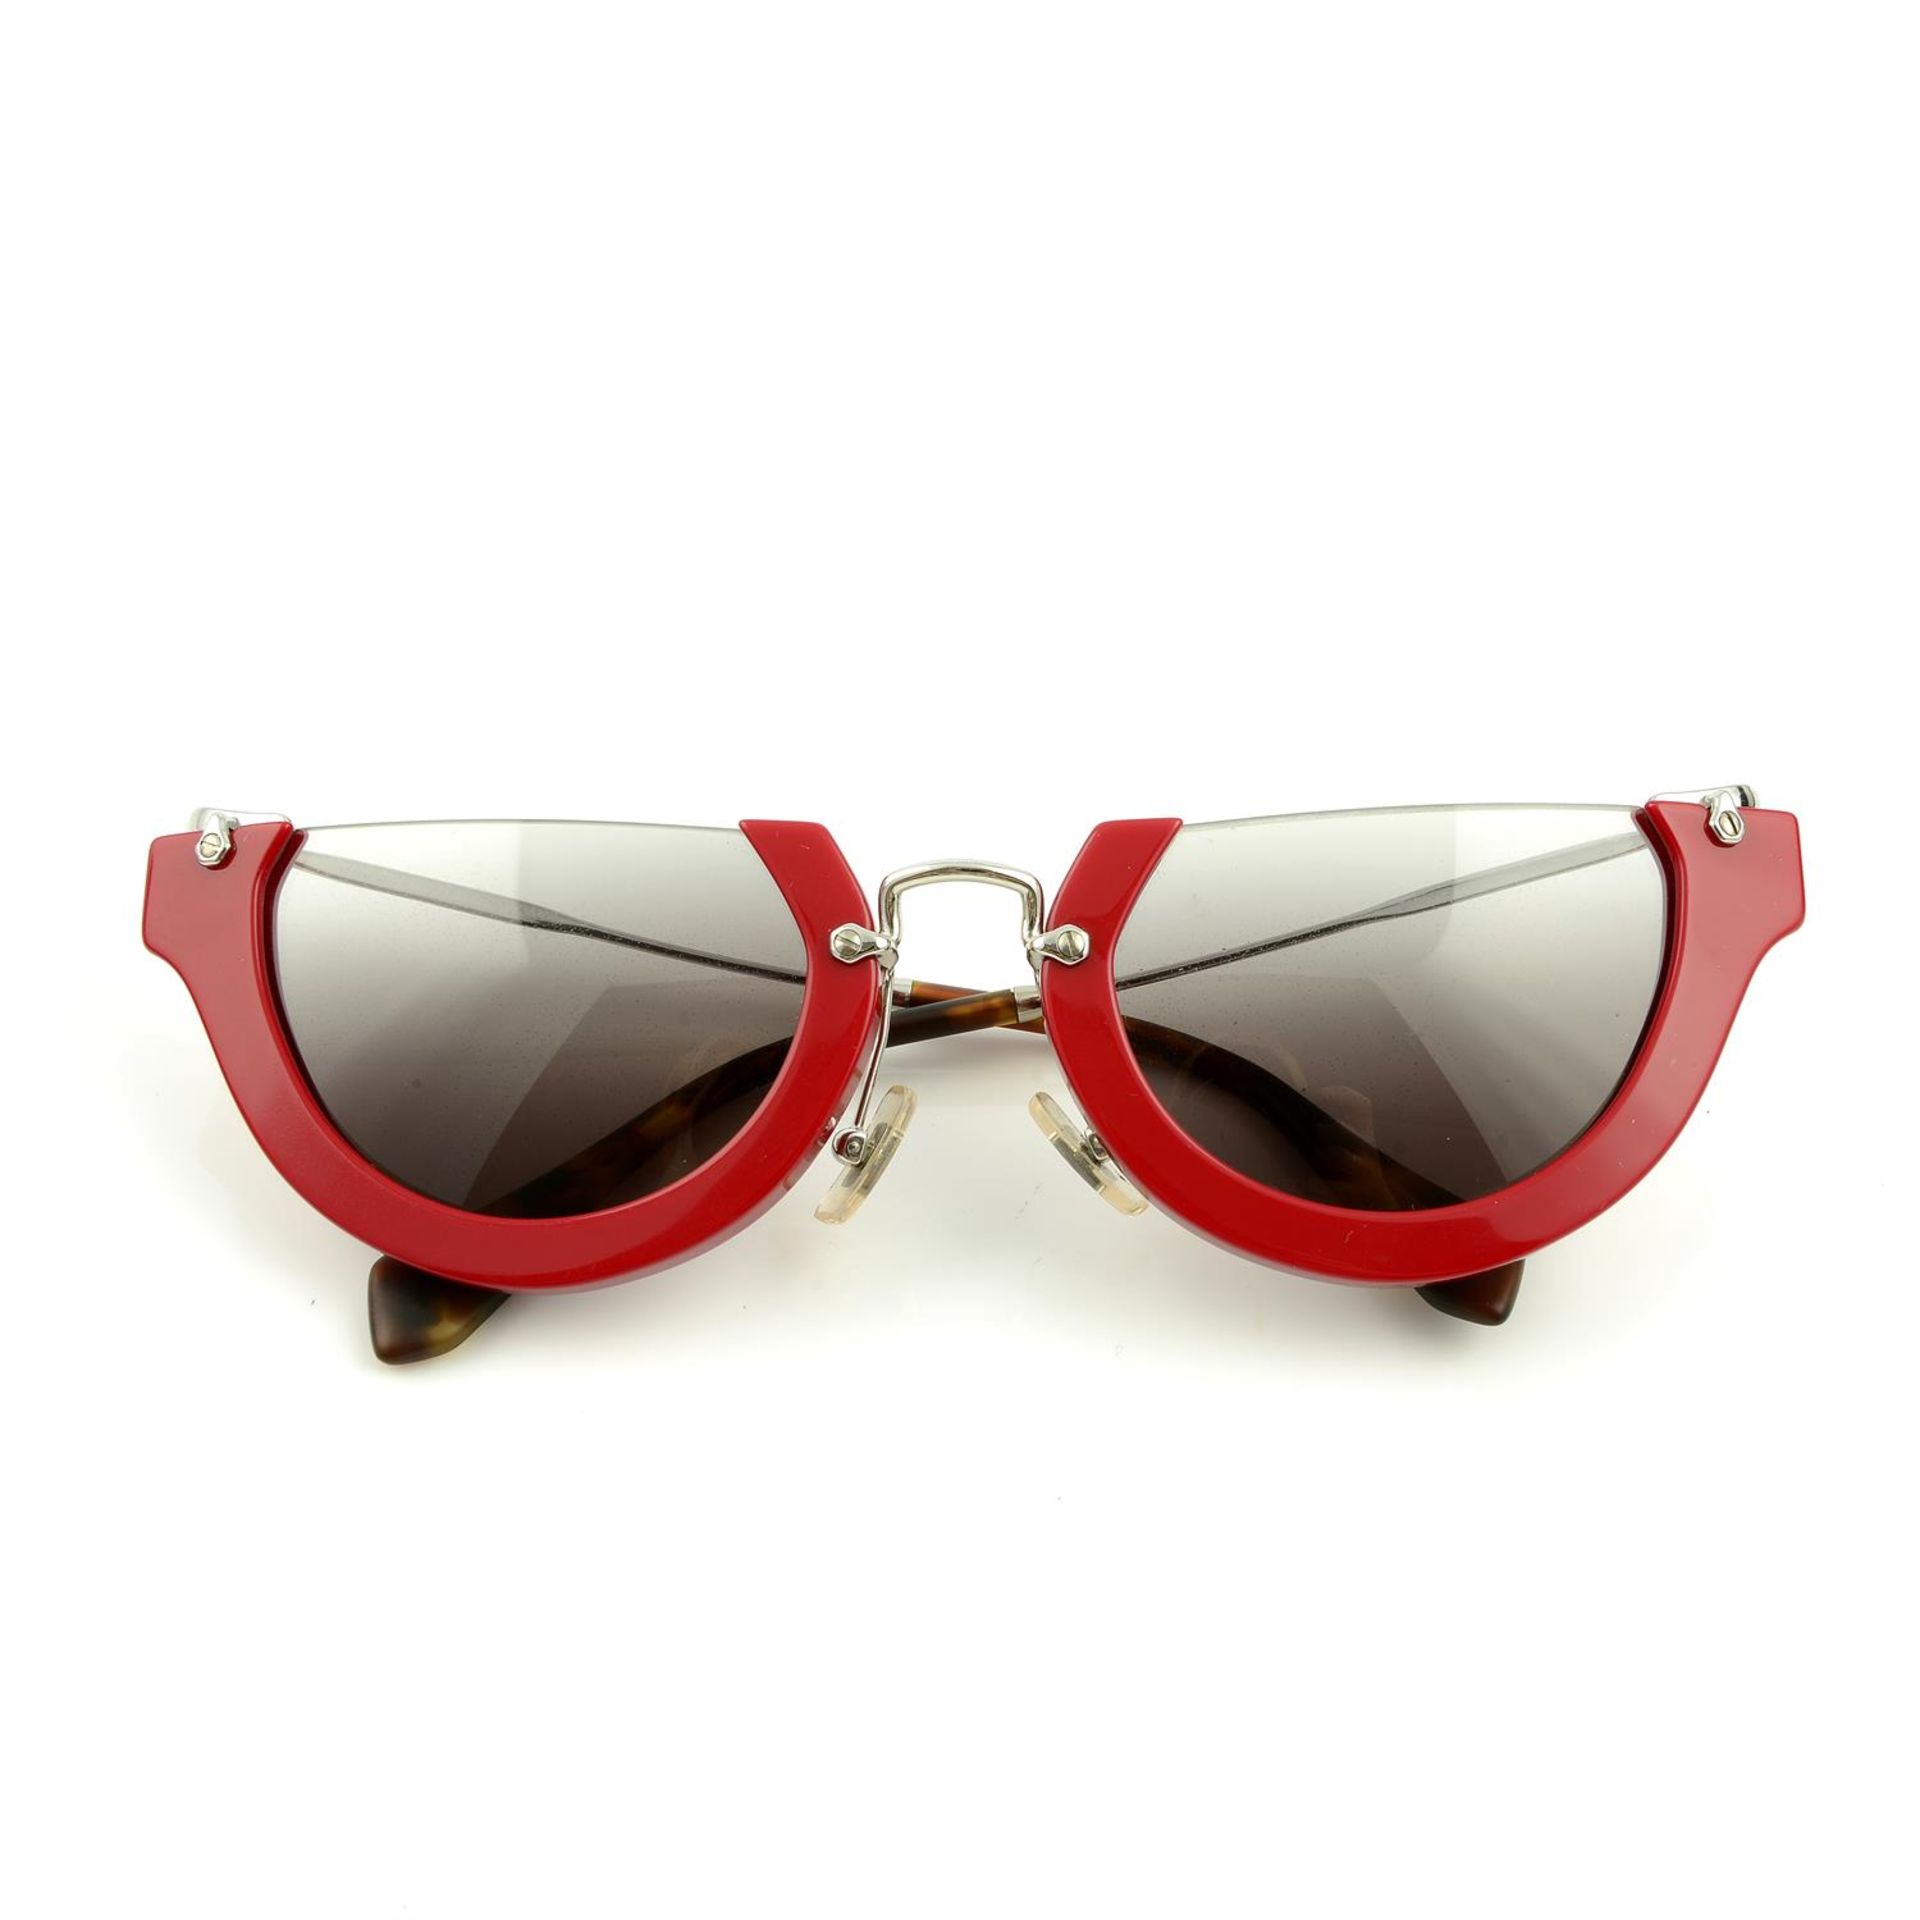 MIU MIU - a pair of sunglasses.